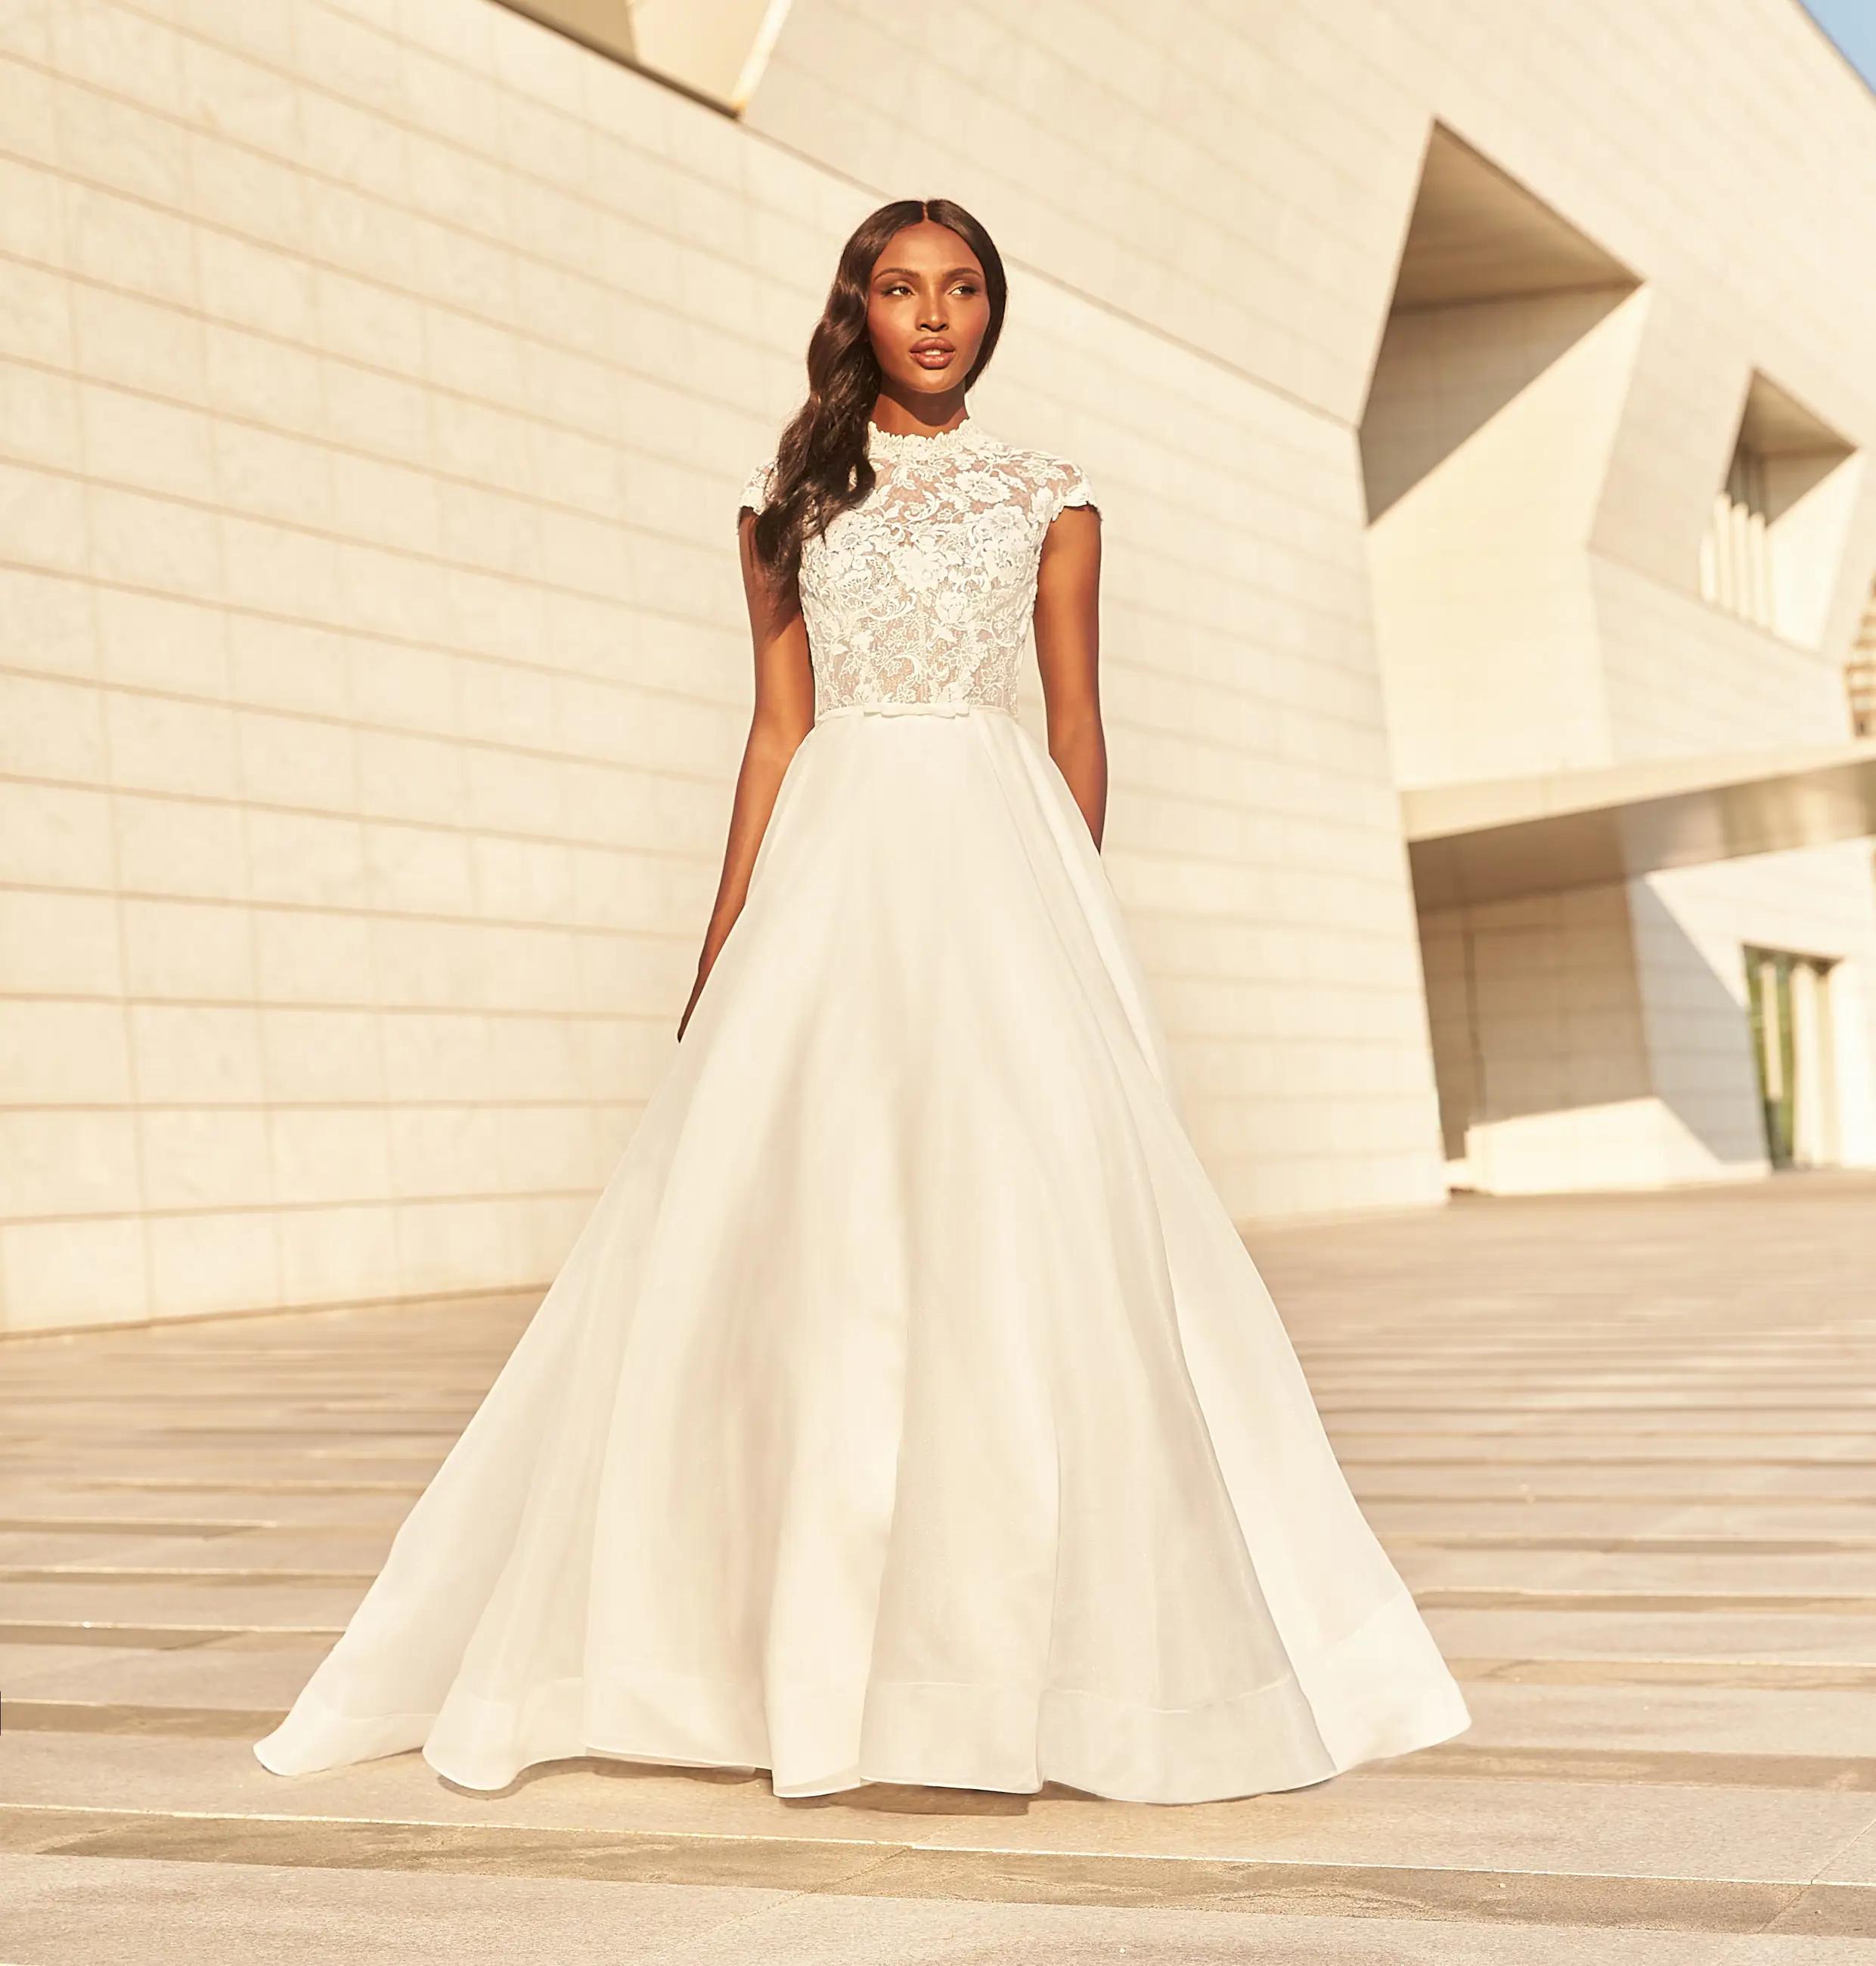 Exploring Different Neckline Options for Bridal Dresses Image